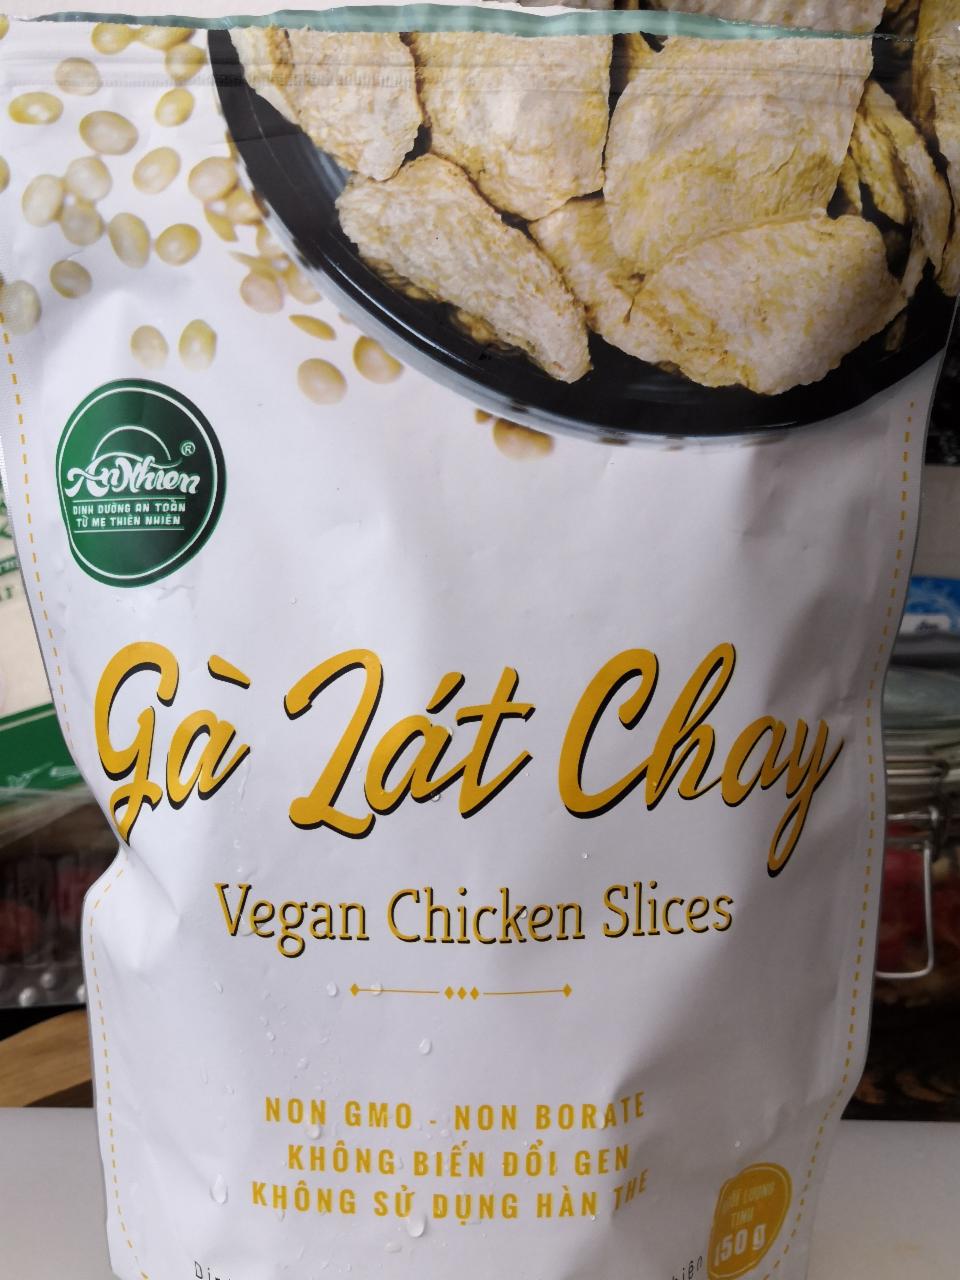 Fotografie - vegan chicken slices Ga Lat Chay